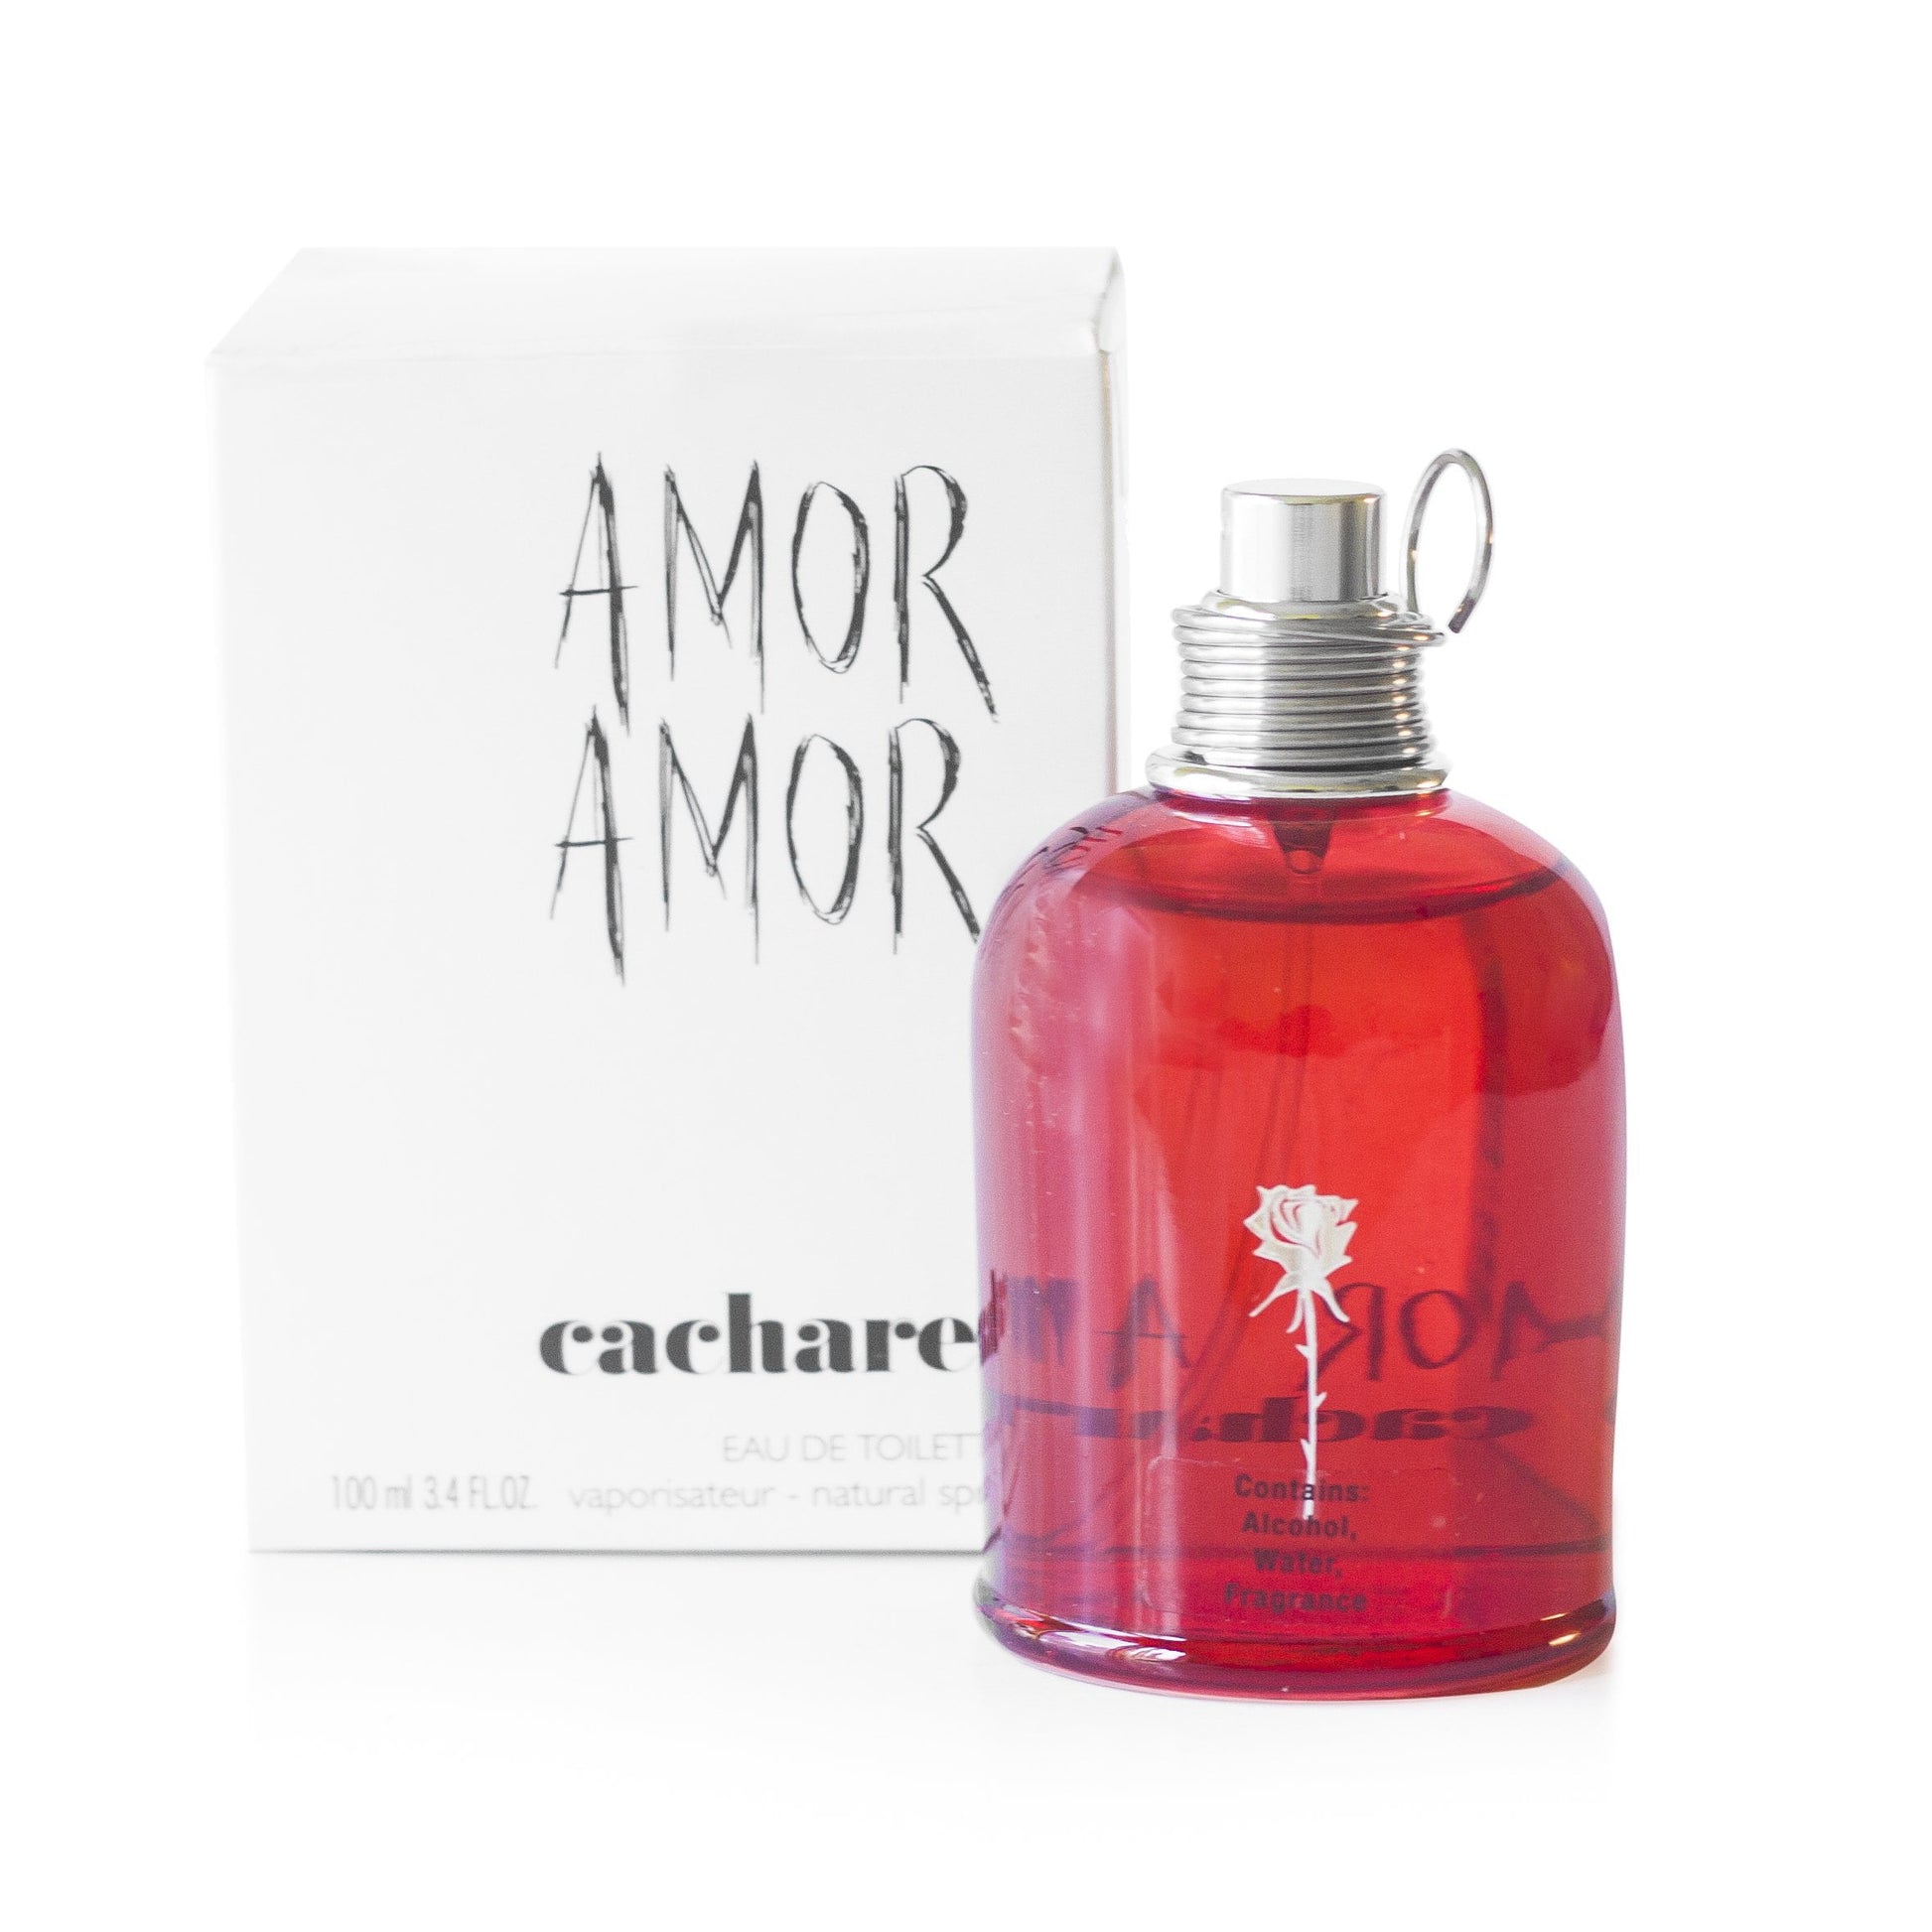 Amor Amor Eau de Toilette Spray for Women by Cacharel, Product image 7